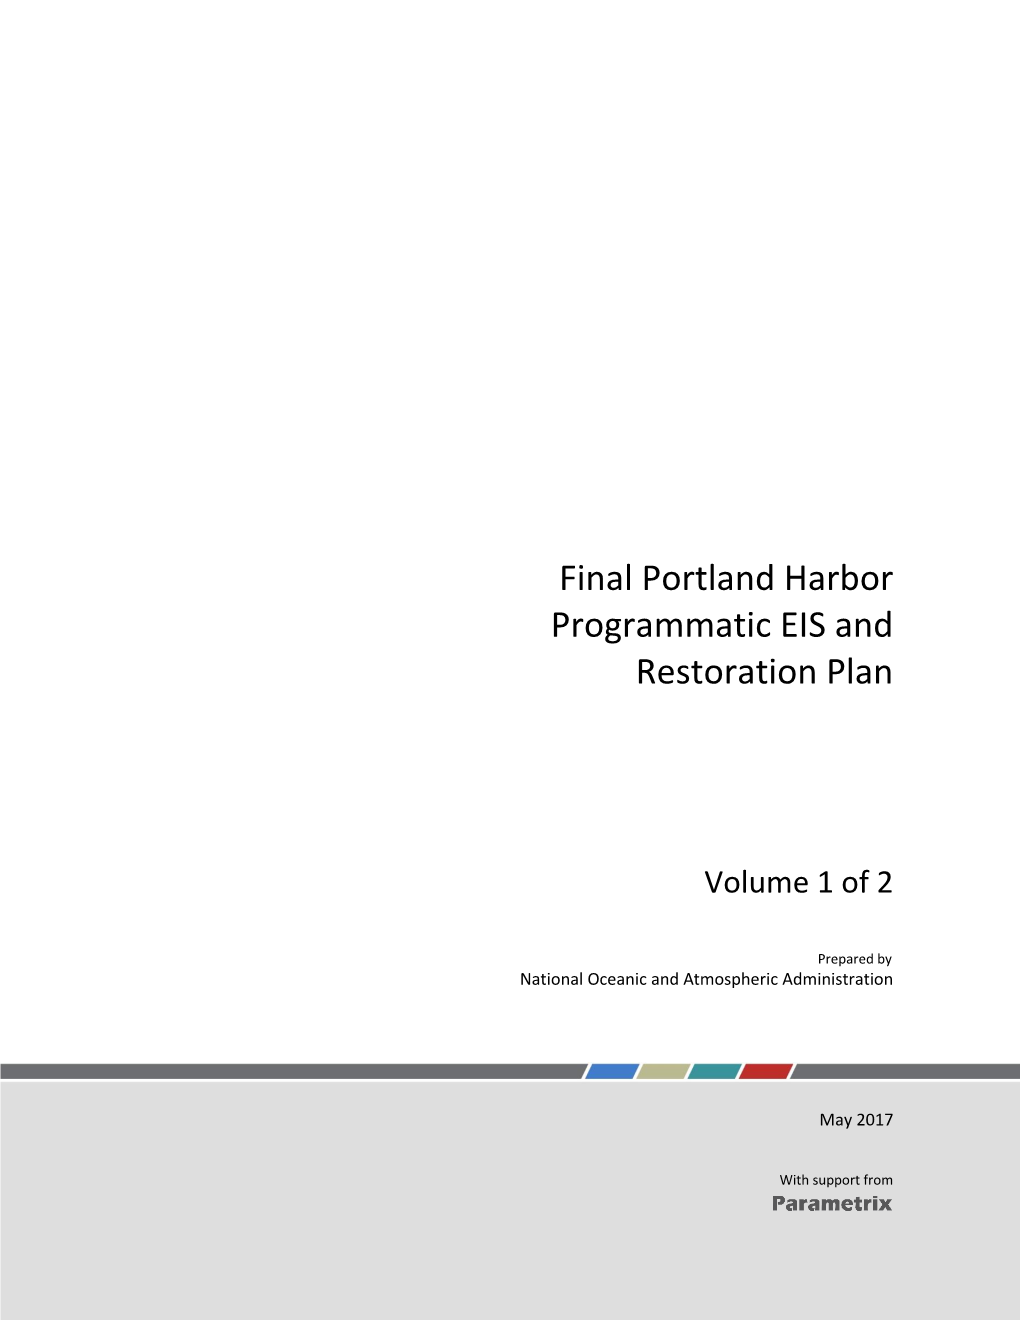 Final Portland Harbor Programmatic EIS and Restoration Plan